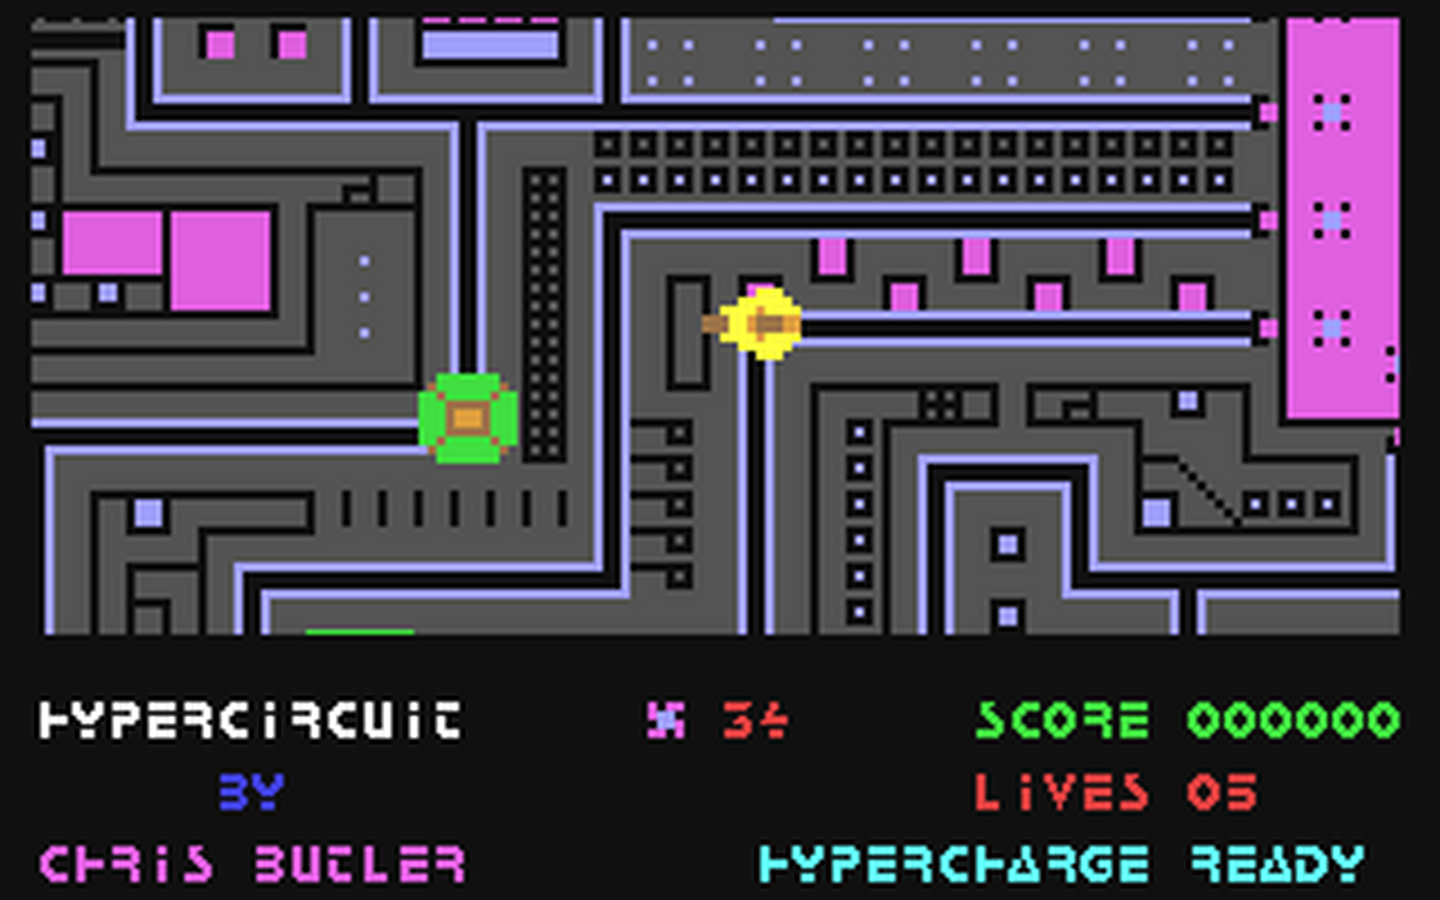 C64 GameBase Hyper_Circuit Alligata_Software 1985